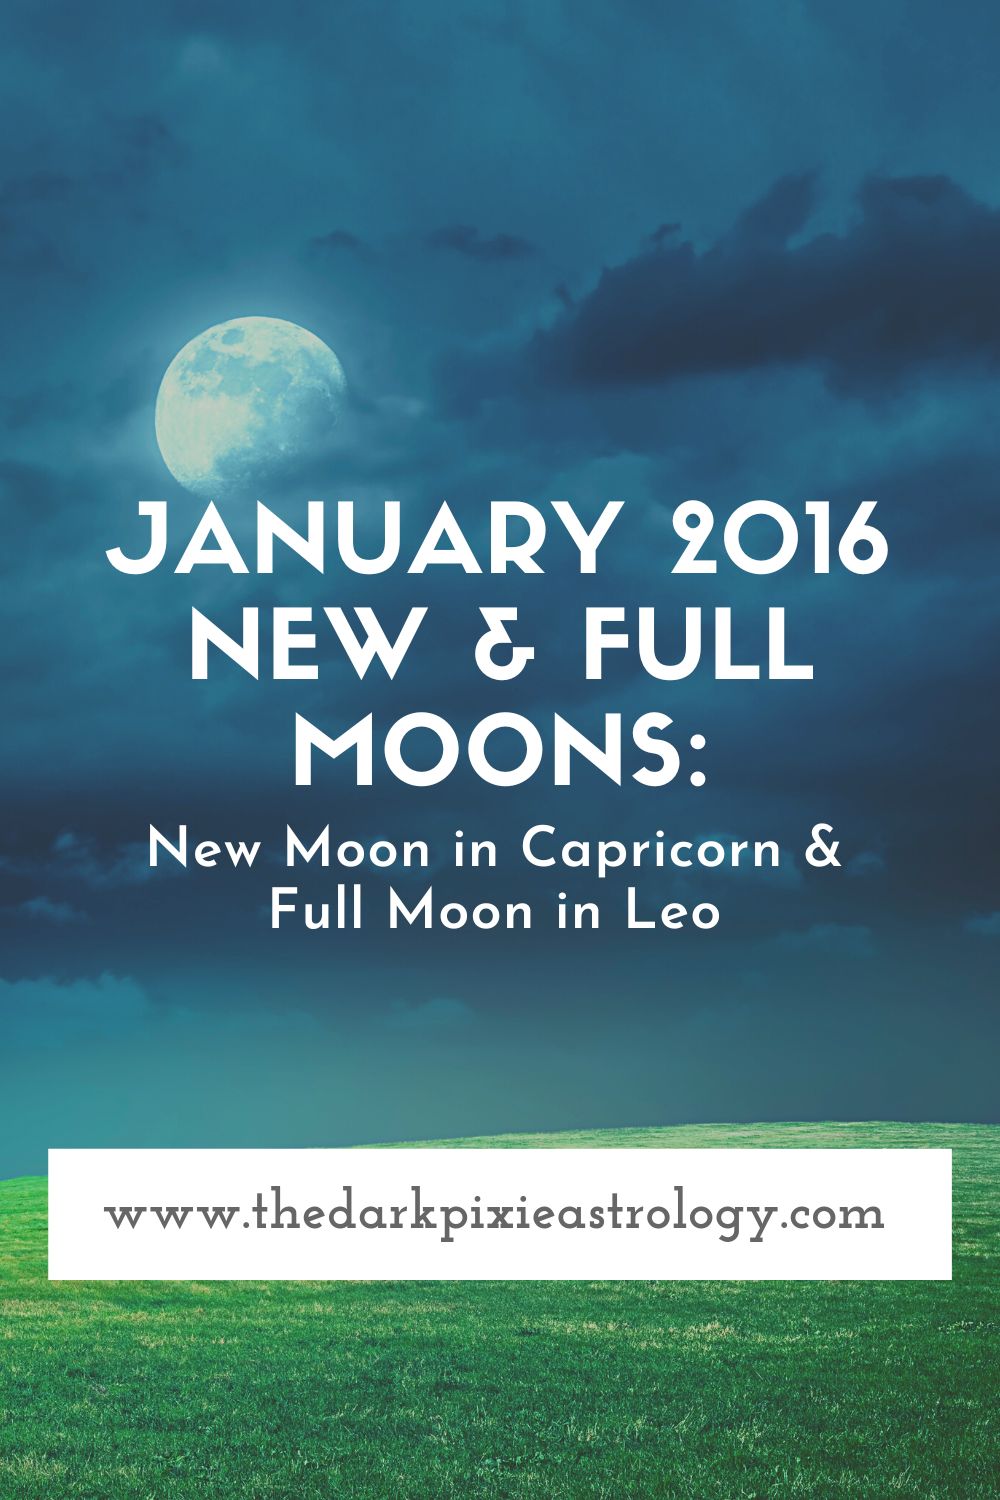 January 2016 New & Full Moons - The Dark Pixie Astrology